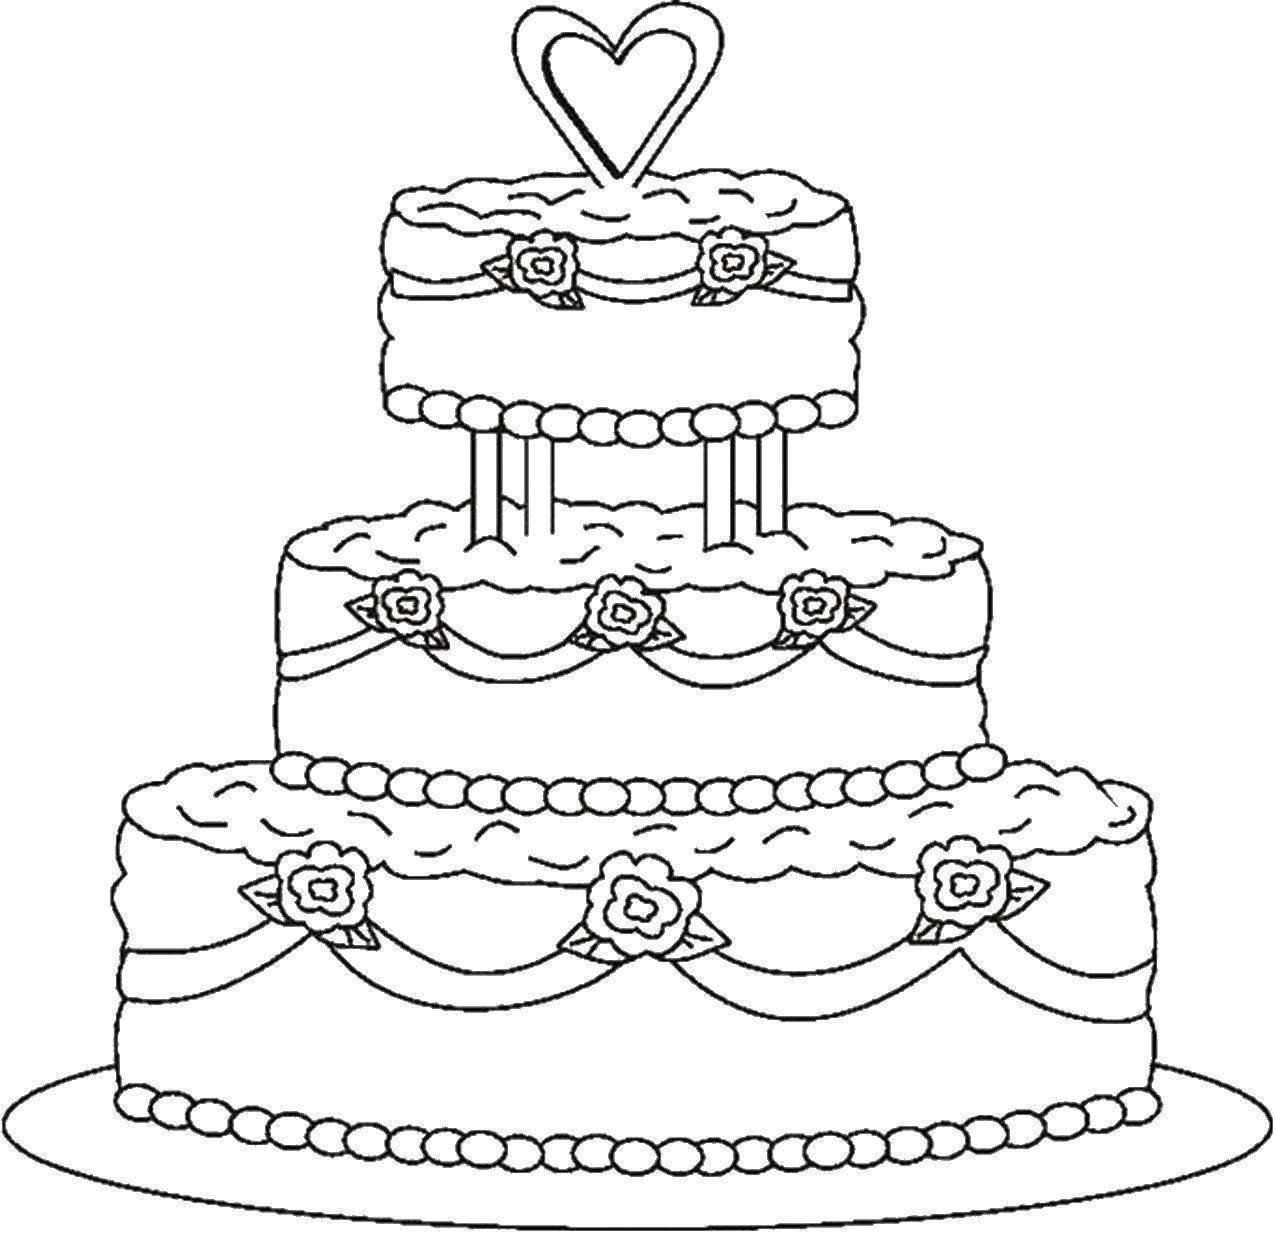 Coloring Svadebnyy cake. Category Wedding. Tags:  wedding, cake, congratulation.